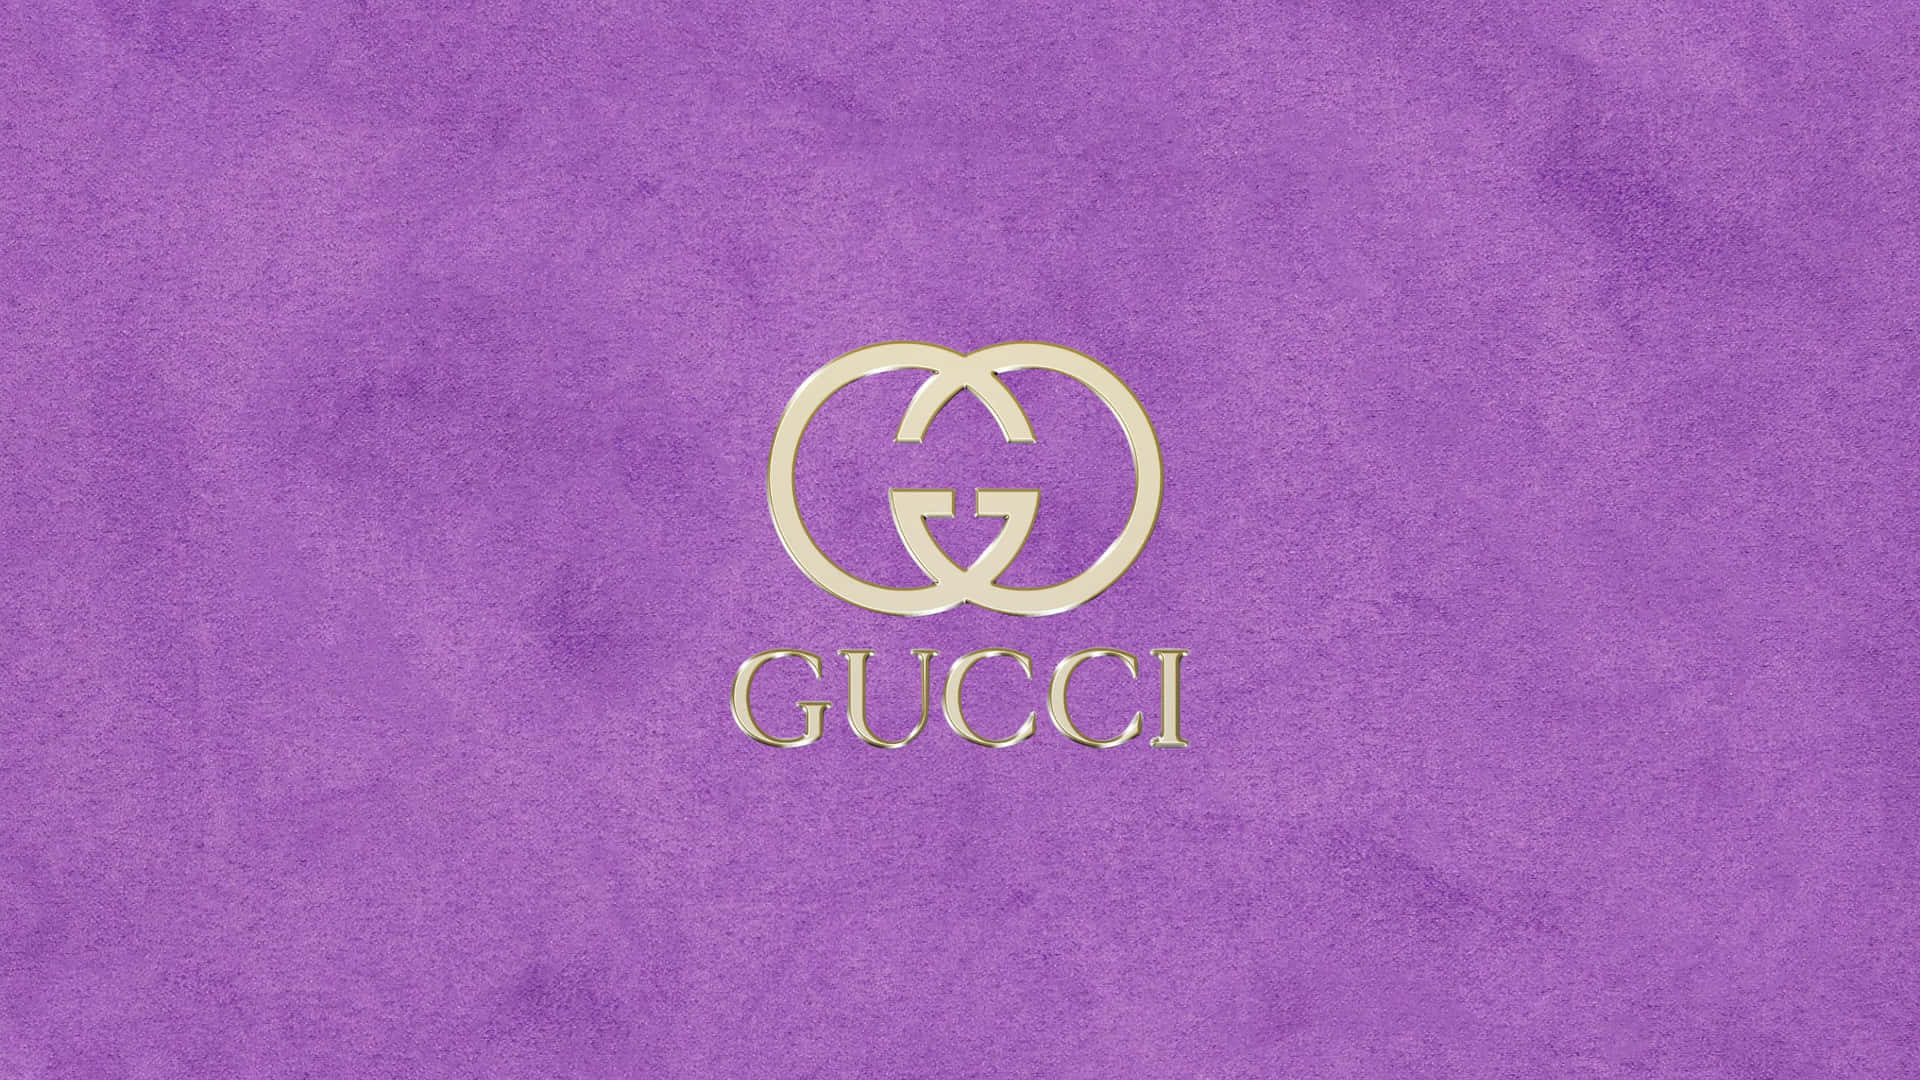 Muestraun Radiante Aspecto Con El Exquisito Purple Gucci. Fondo de pantalla